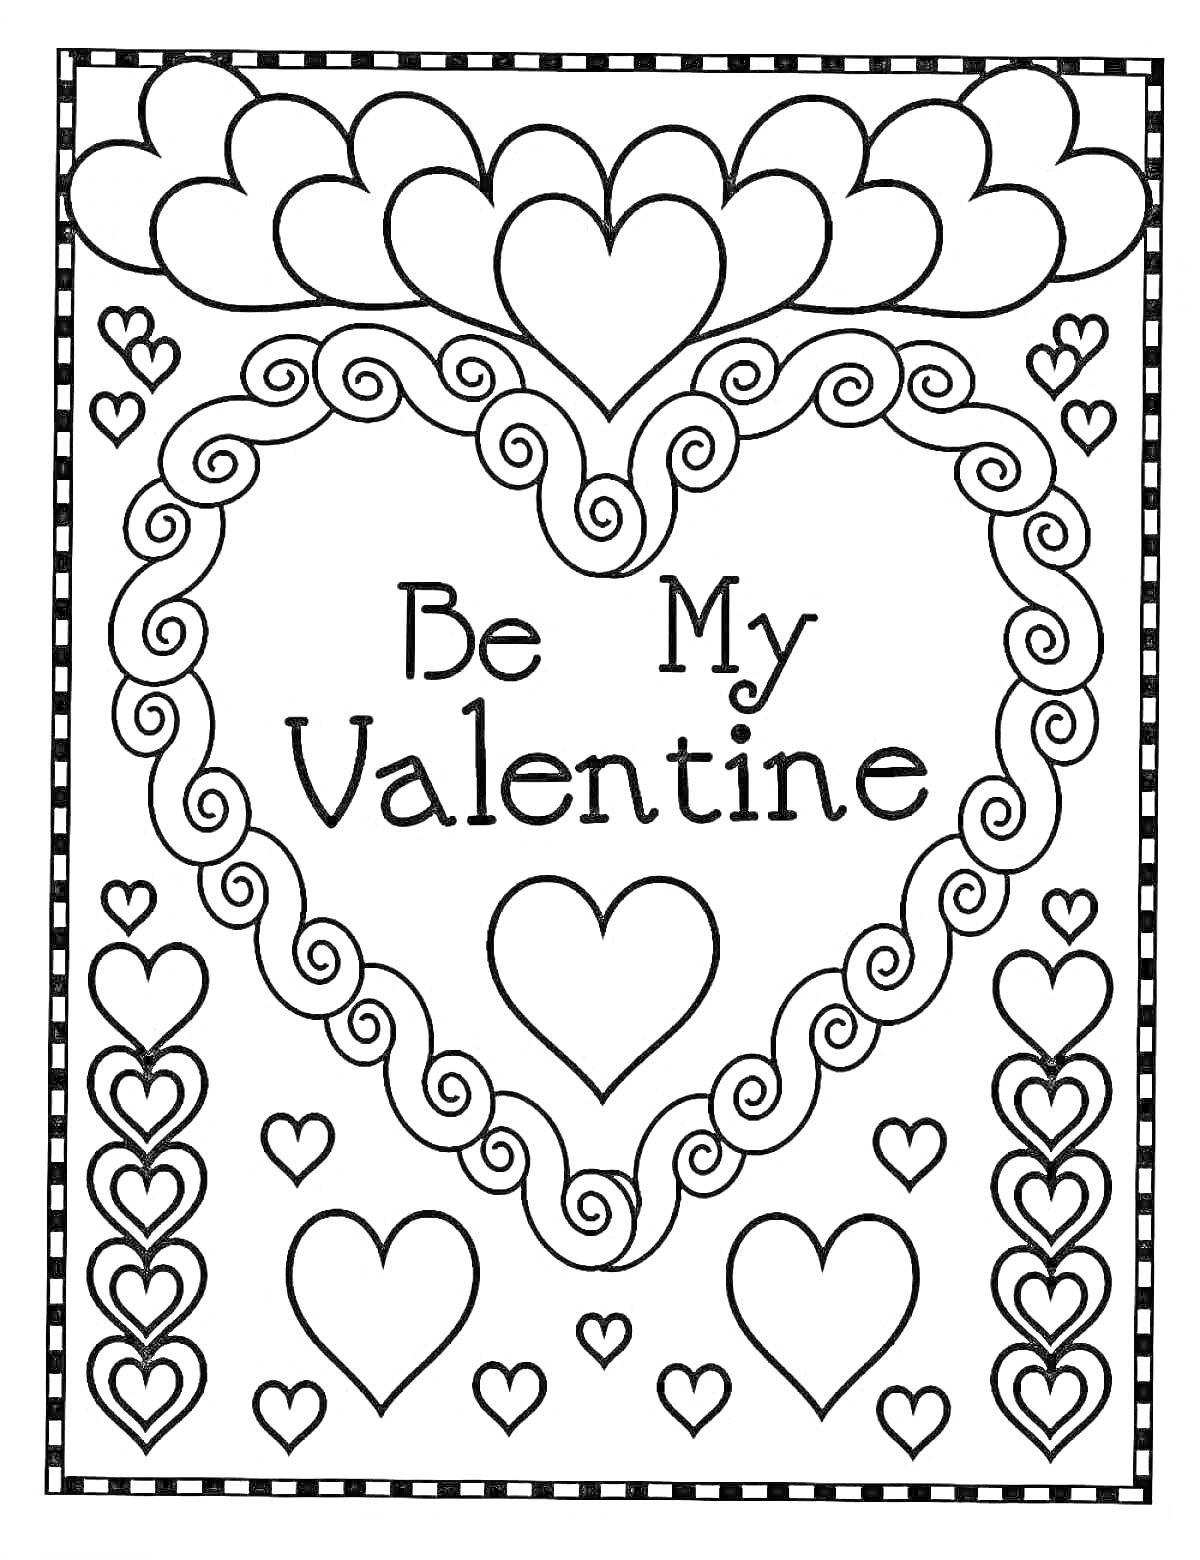 Раскраска Be My Valentine с сердцами и узорами